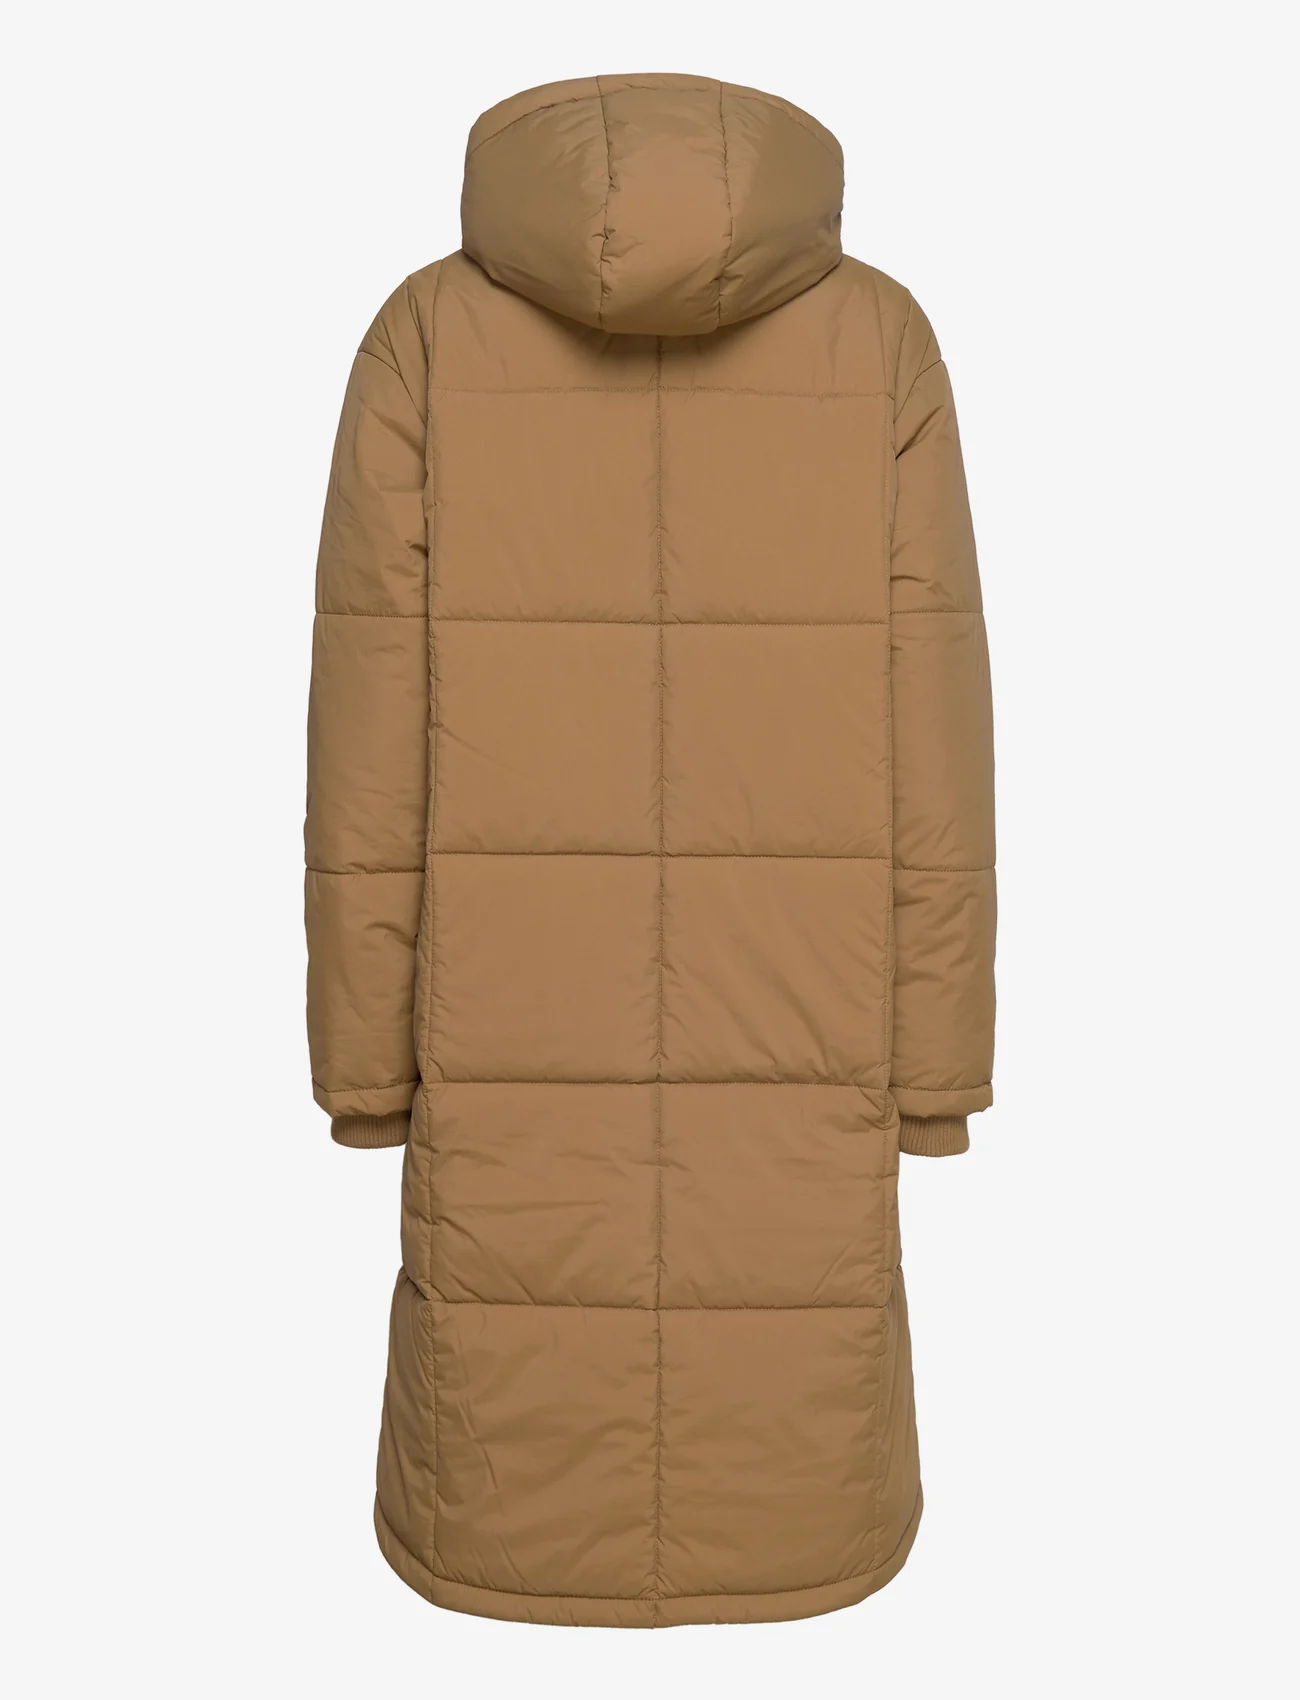 Tretorn - PADDED COAT - winter jackets - 609 ermine - 1